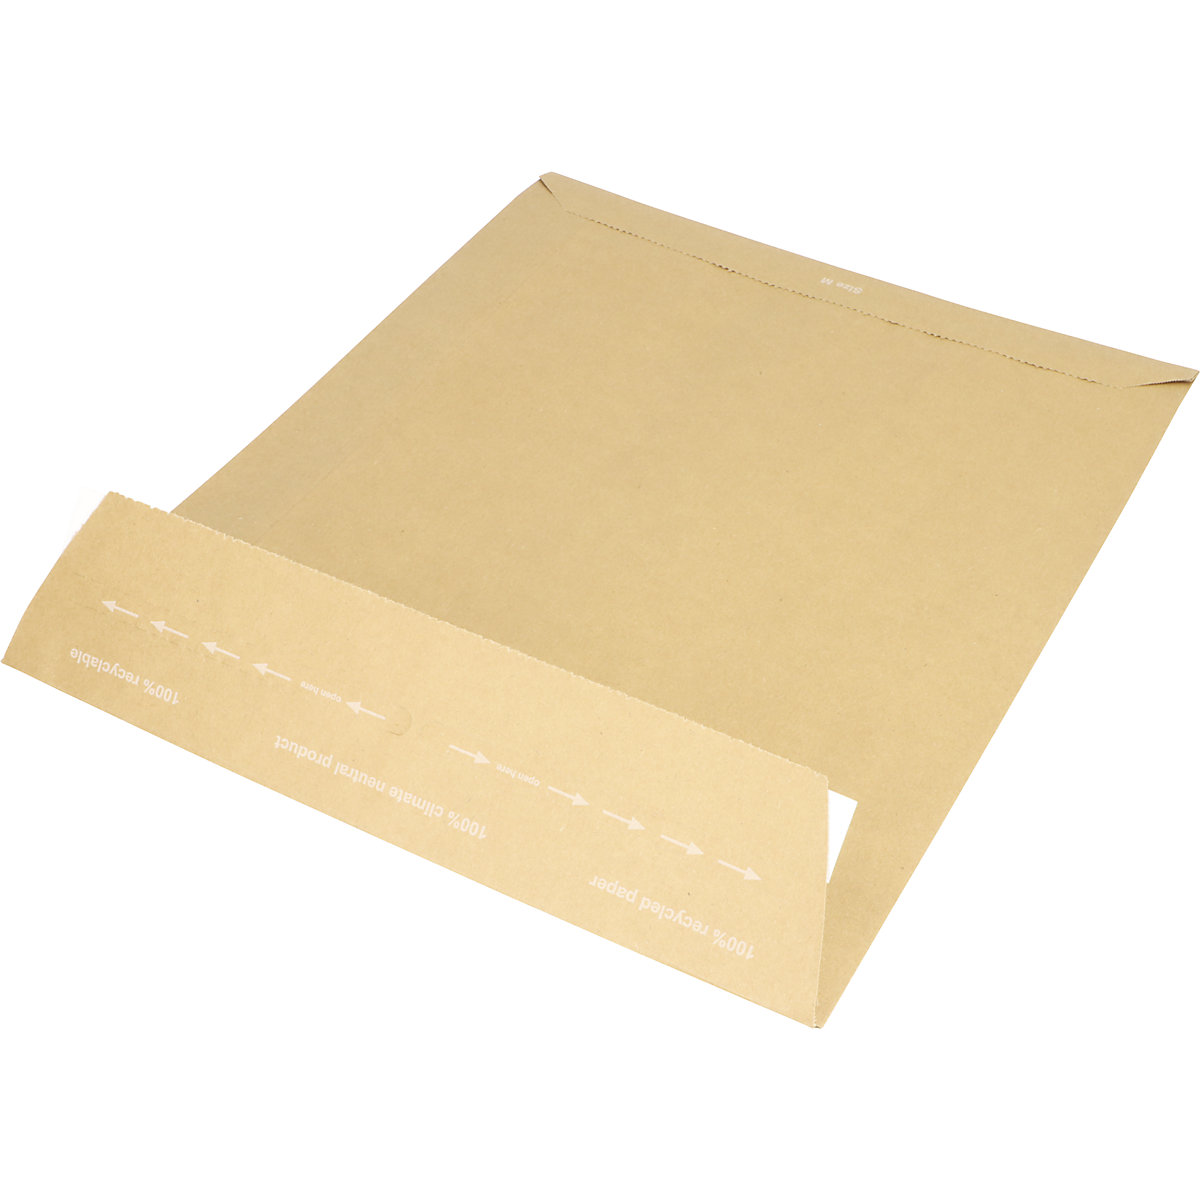 Versandtasche aus Papier E-Commerce terra, retourengeeignet, LxB 420 x 340 mm, VE 200 Stk, ab 5 VE-3